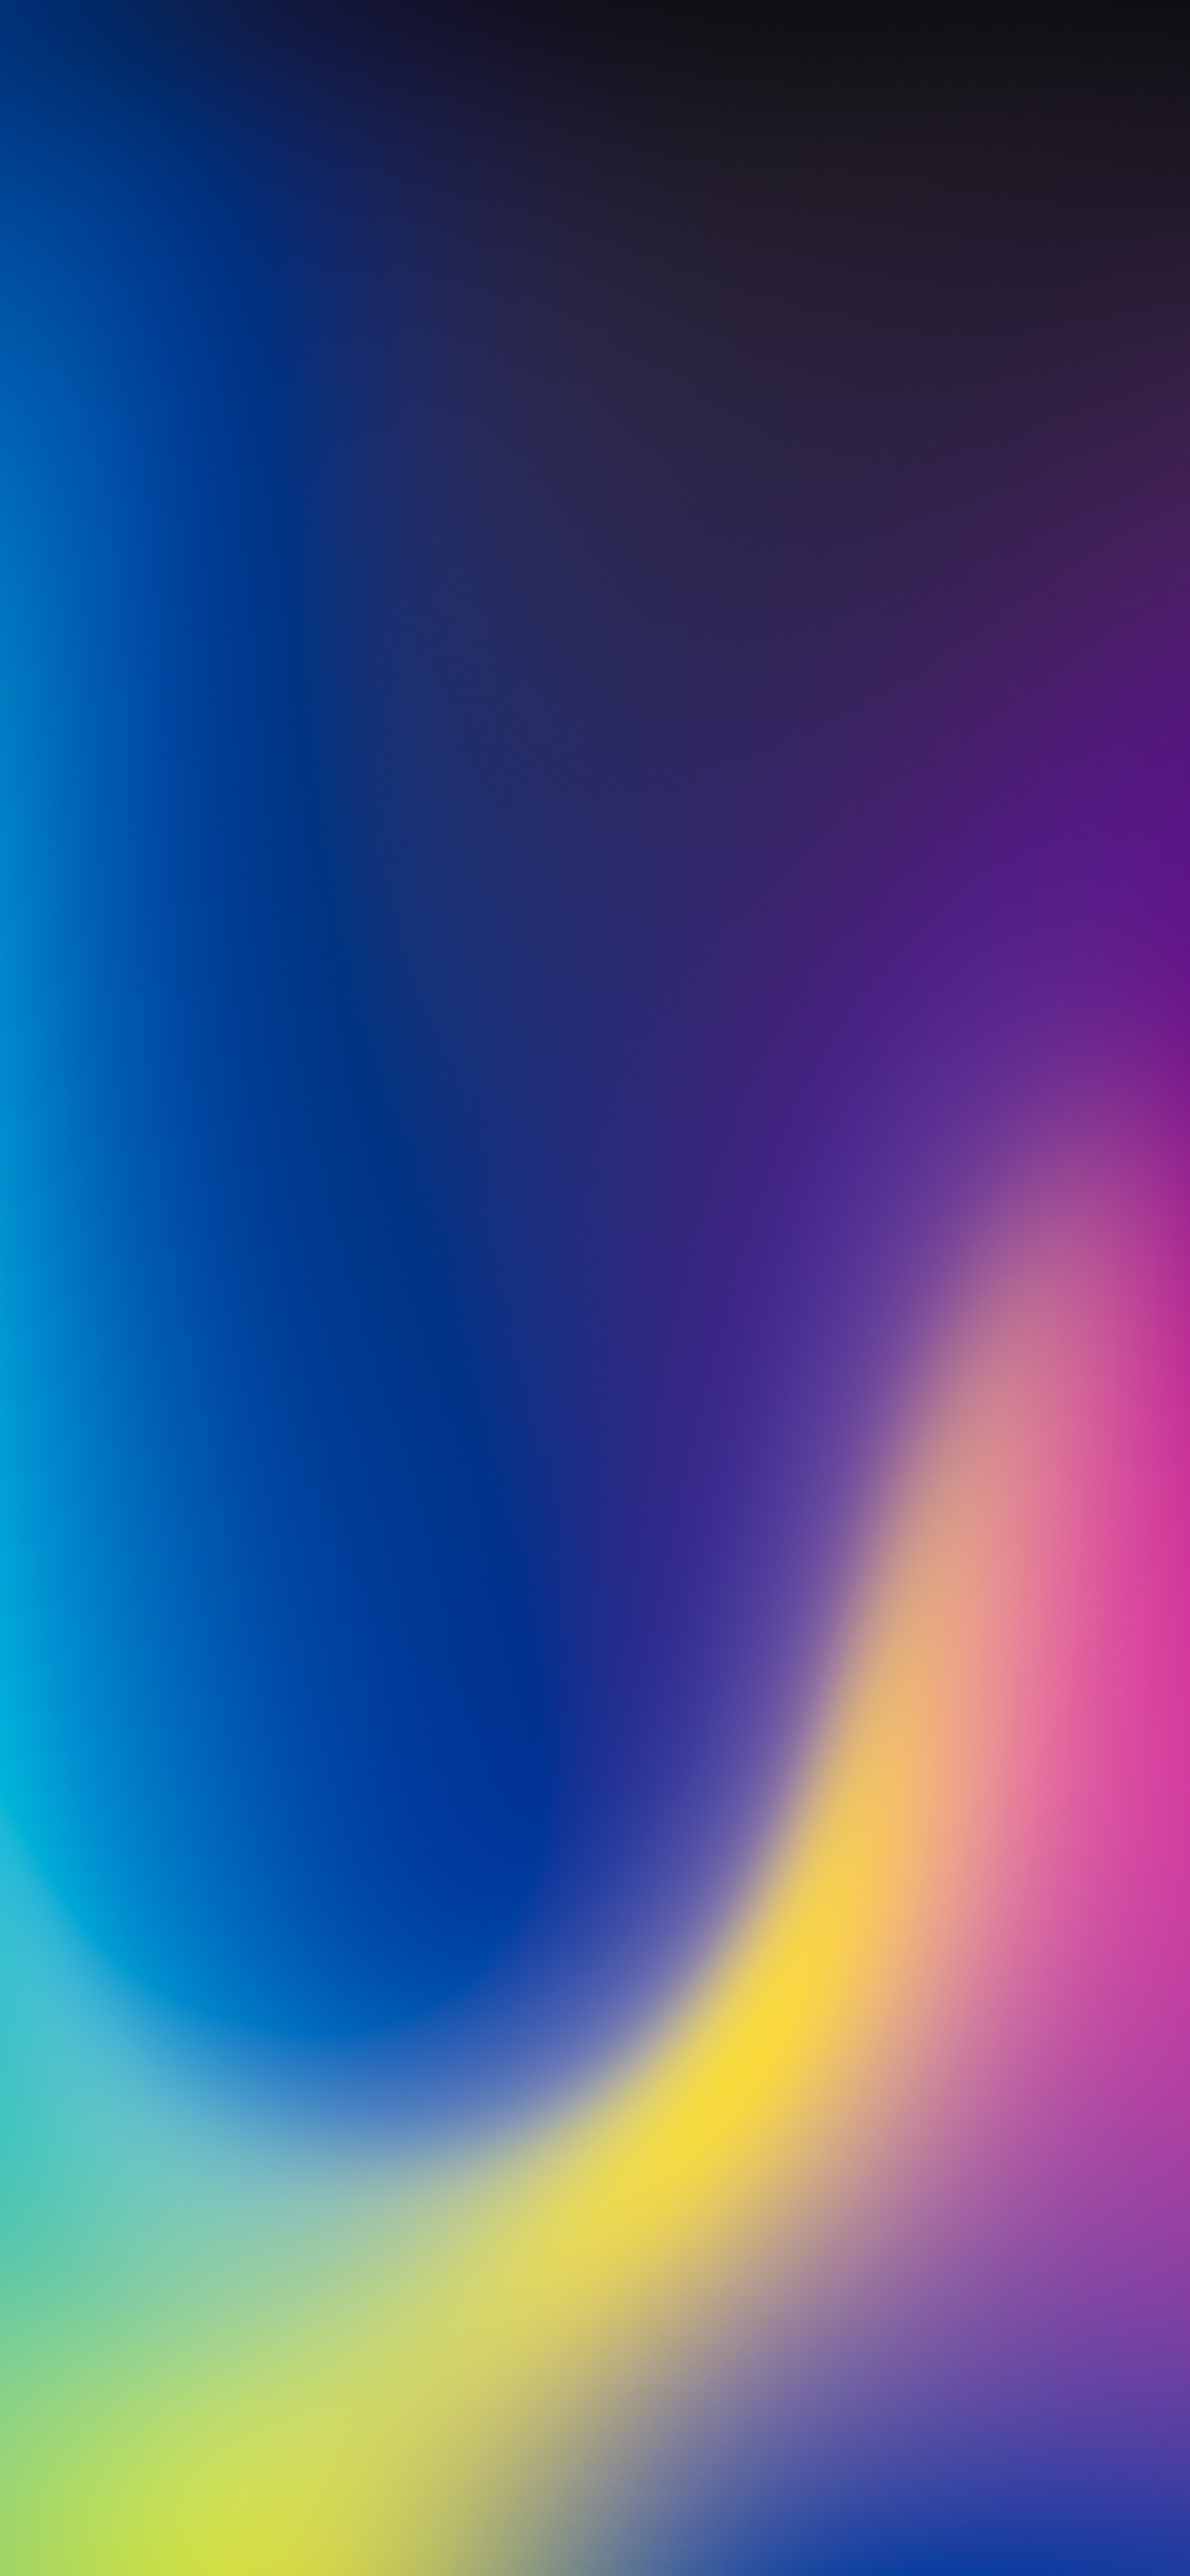 3d render abstract background Wavy metallic texture banner Ultraviolet  wallpaper fluid ripples liquid metal surface esoteric aura spectrum in  bright 23854293 Stock Photo at Vecteezy